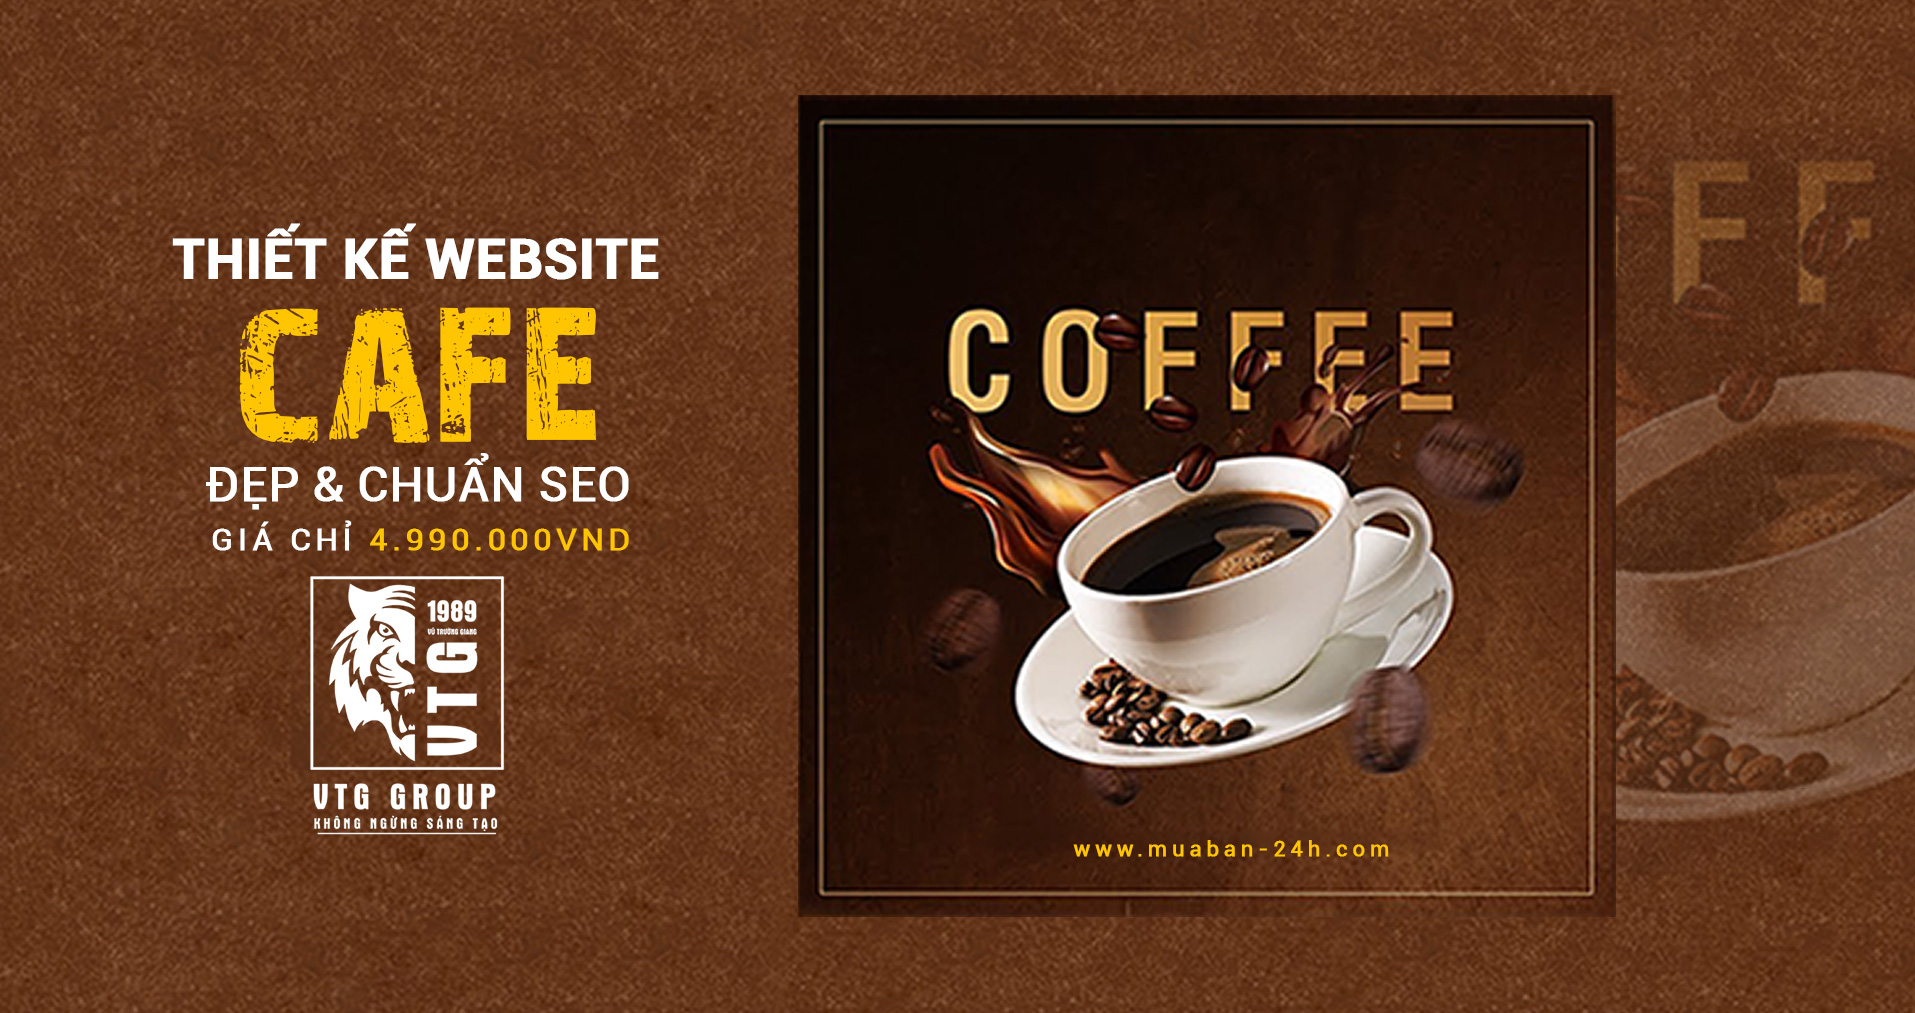 Thiết kế website cafe đẹp chuẩn SEO